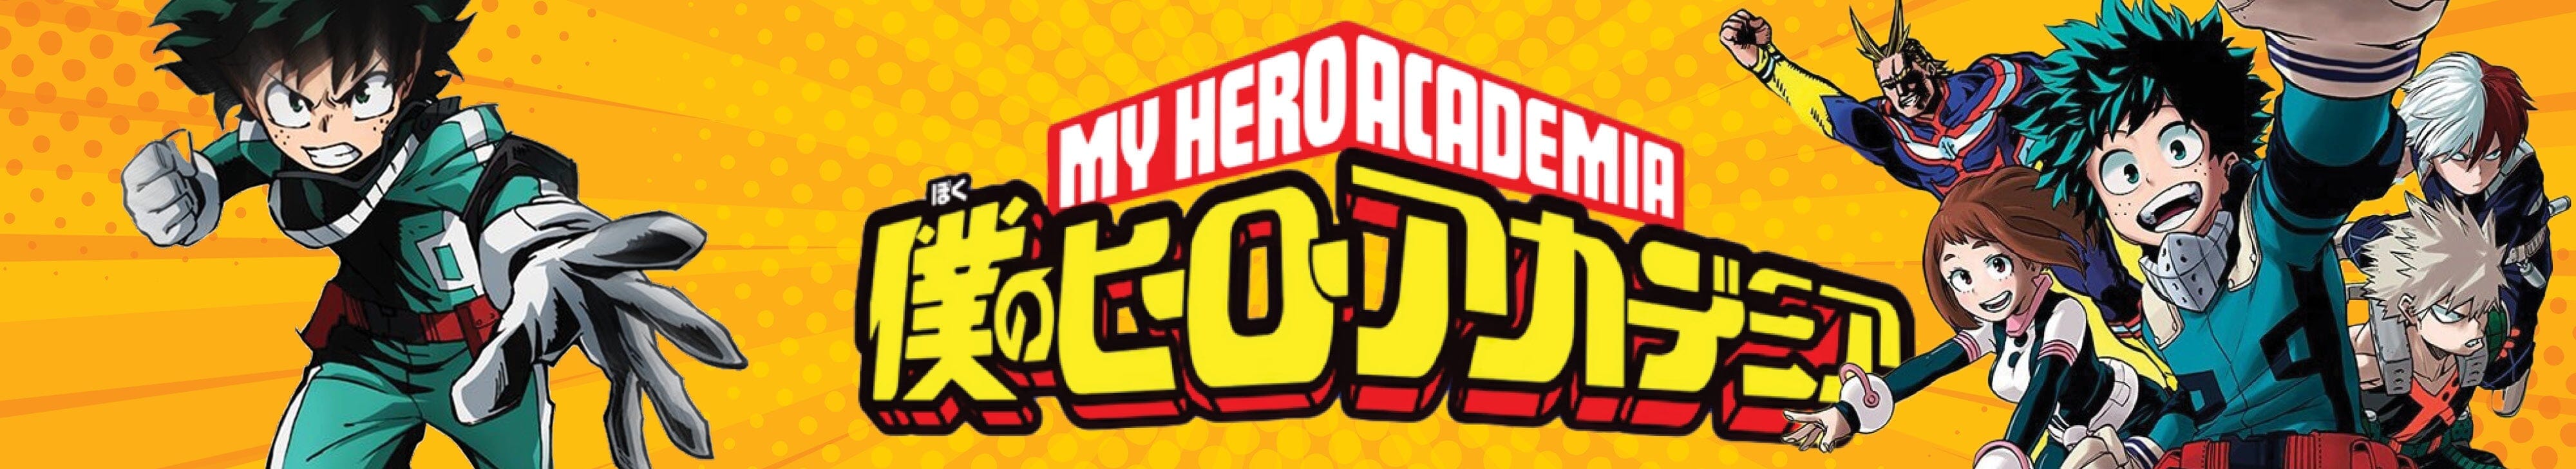 Anime: My Hero Academia